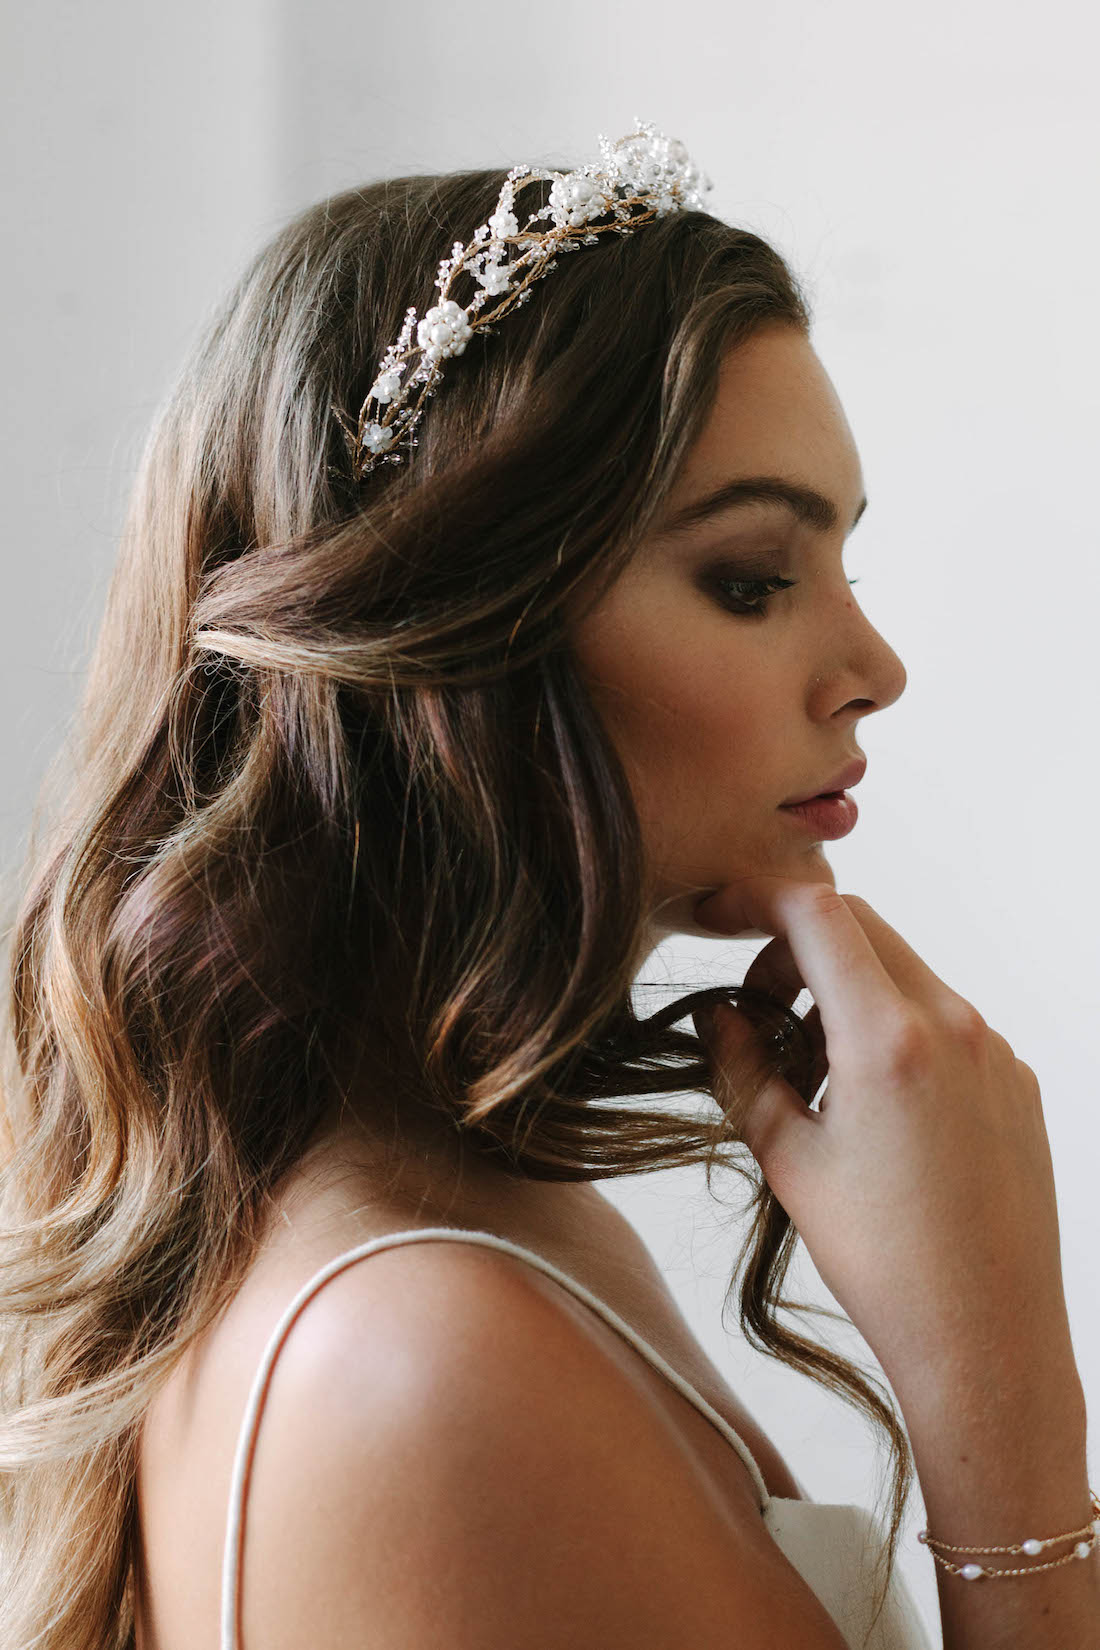 Top 20 Bridal Headpieces for Your Wedding Hairstyles -  Elegantweddinginvites.com Blog